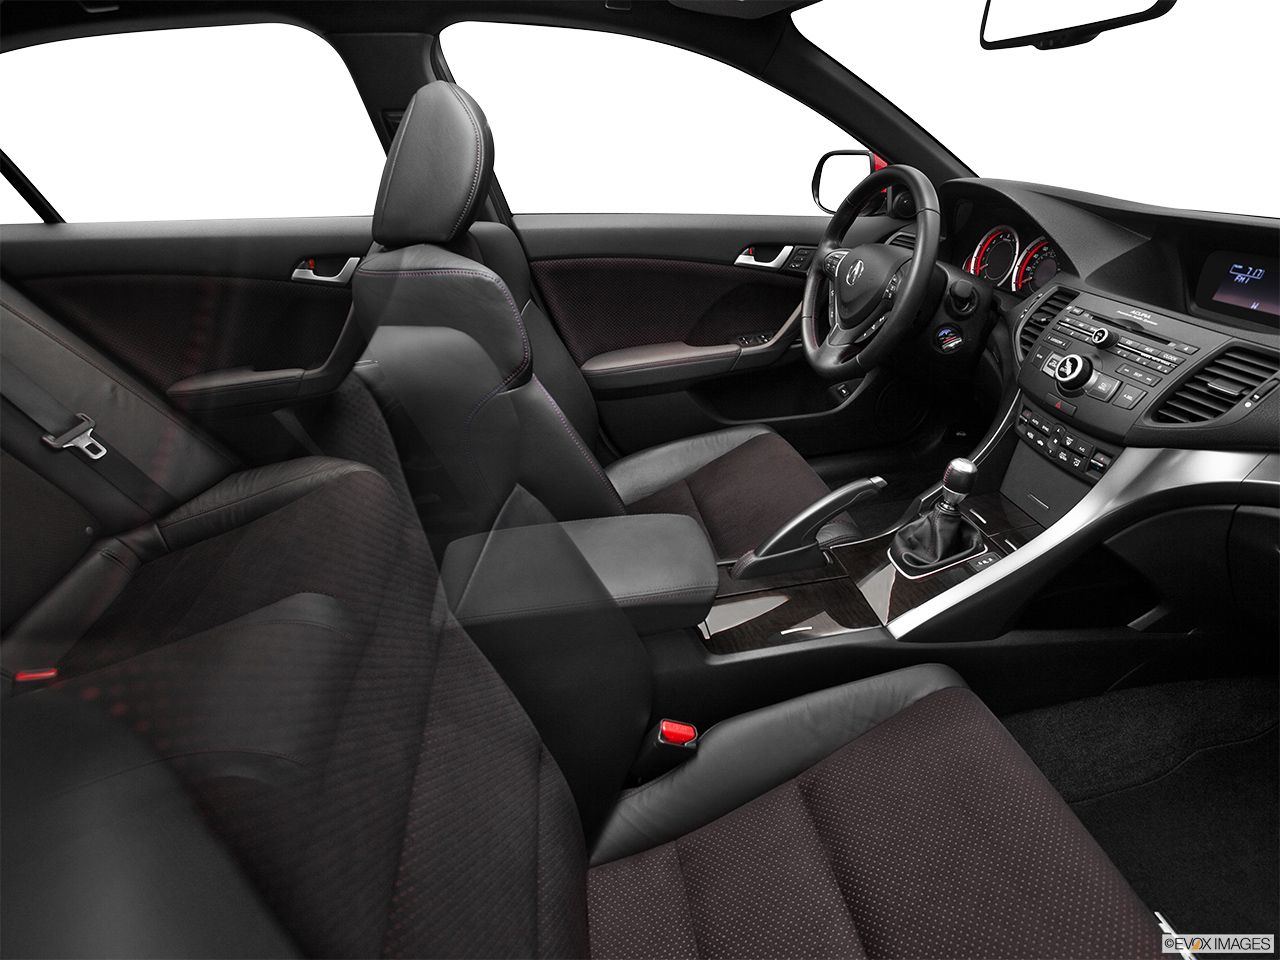 2012 Acura TSX Special Edition 6-Speed Manual Fake Buck Shot - Interior from Passenger B pillar. 